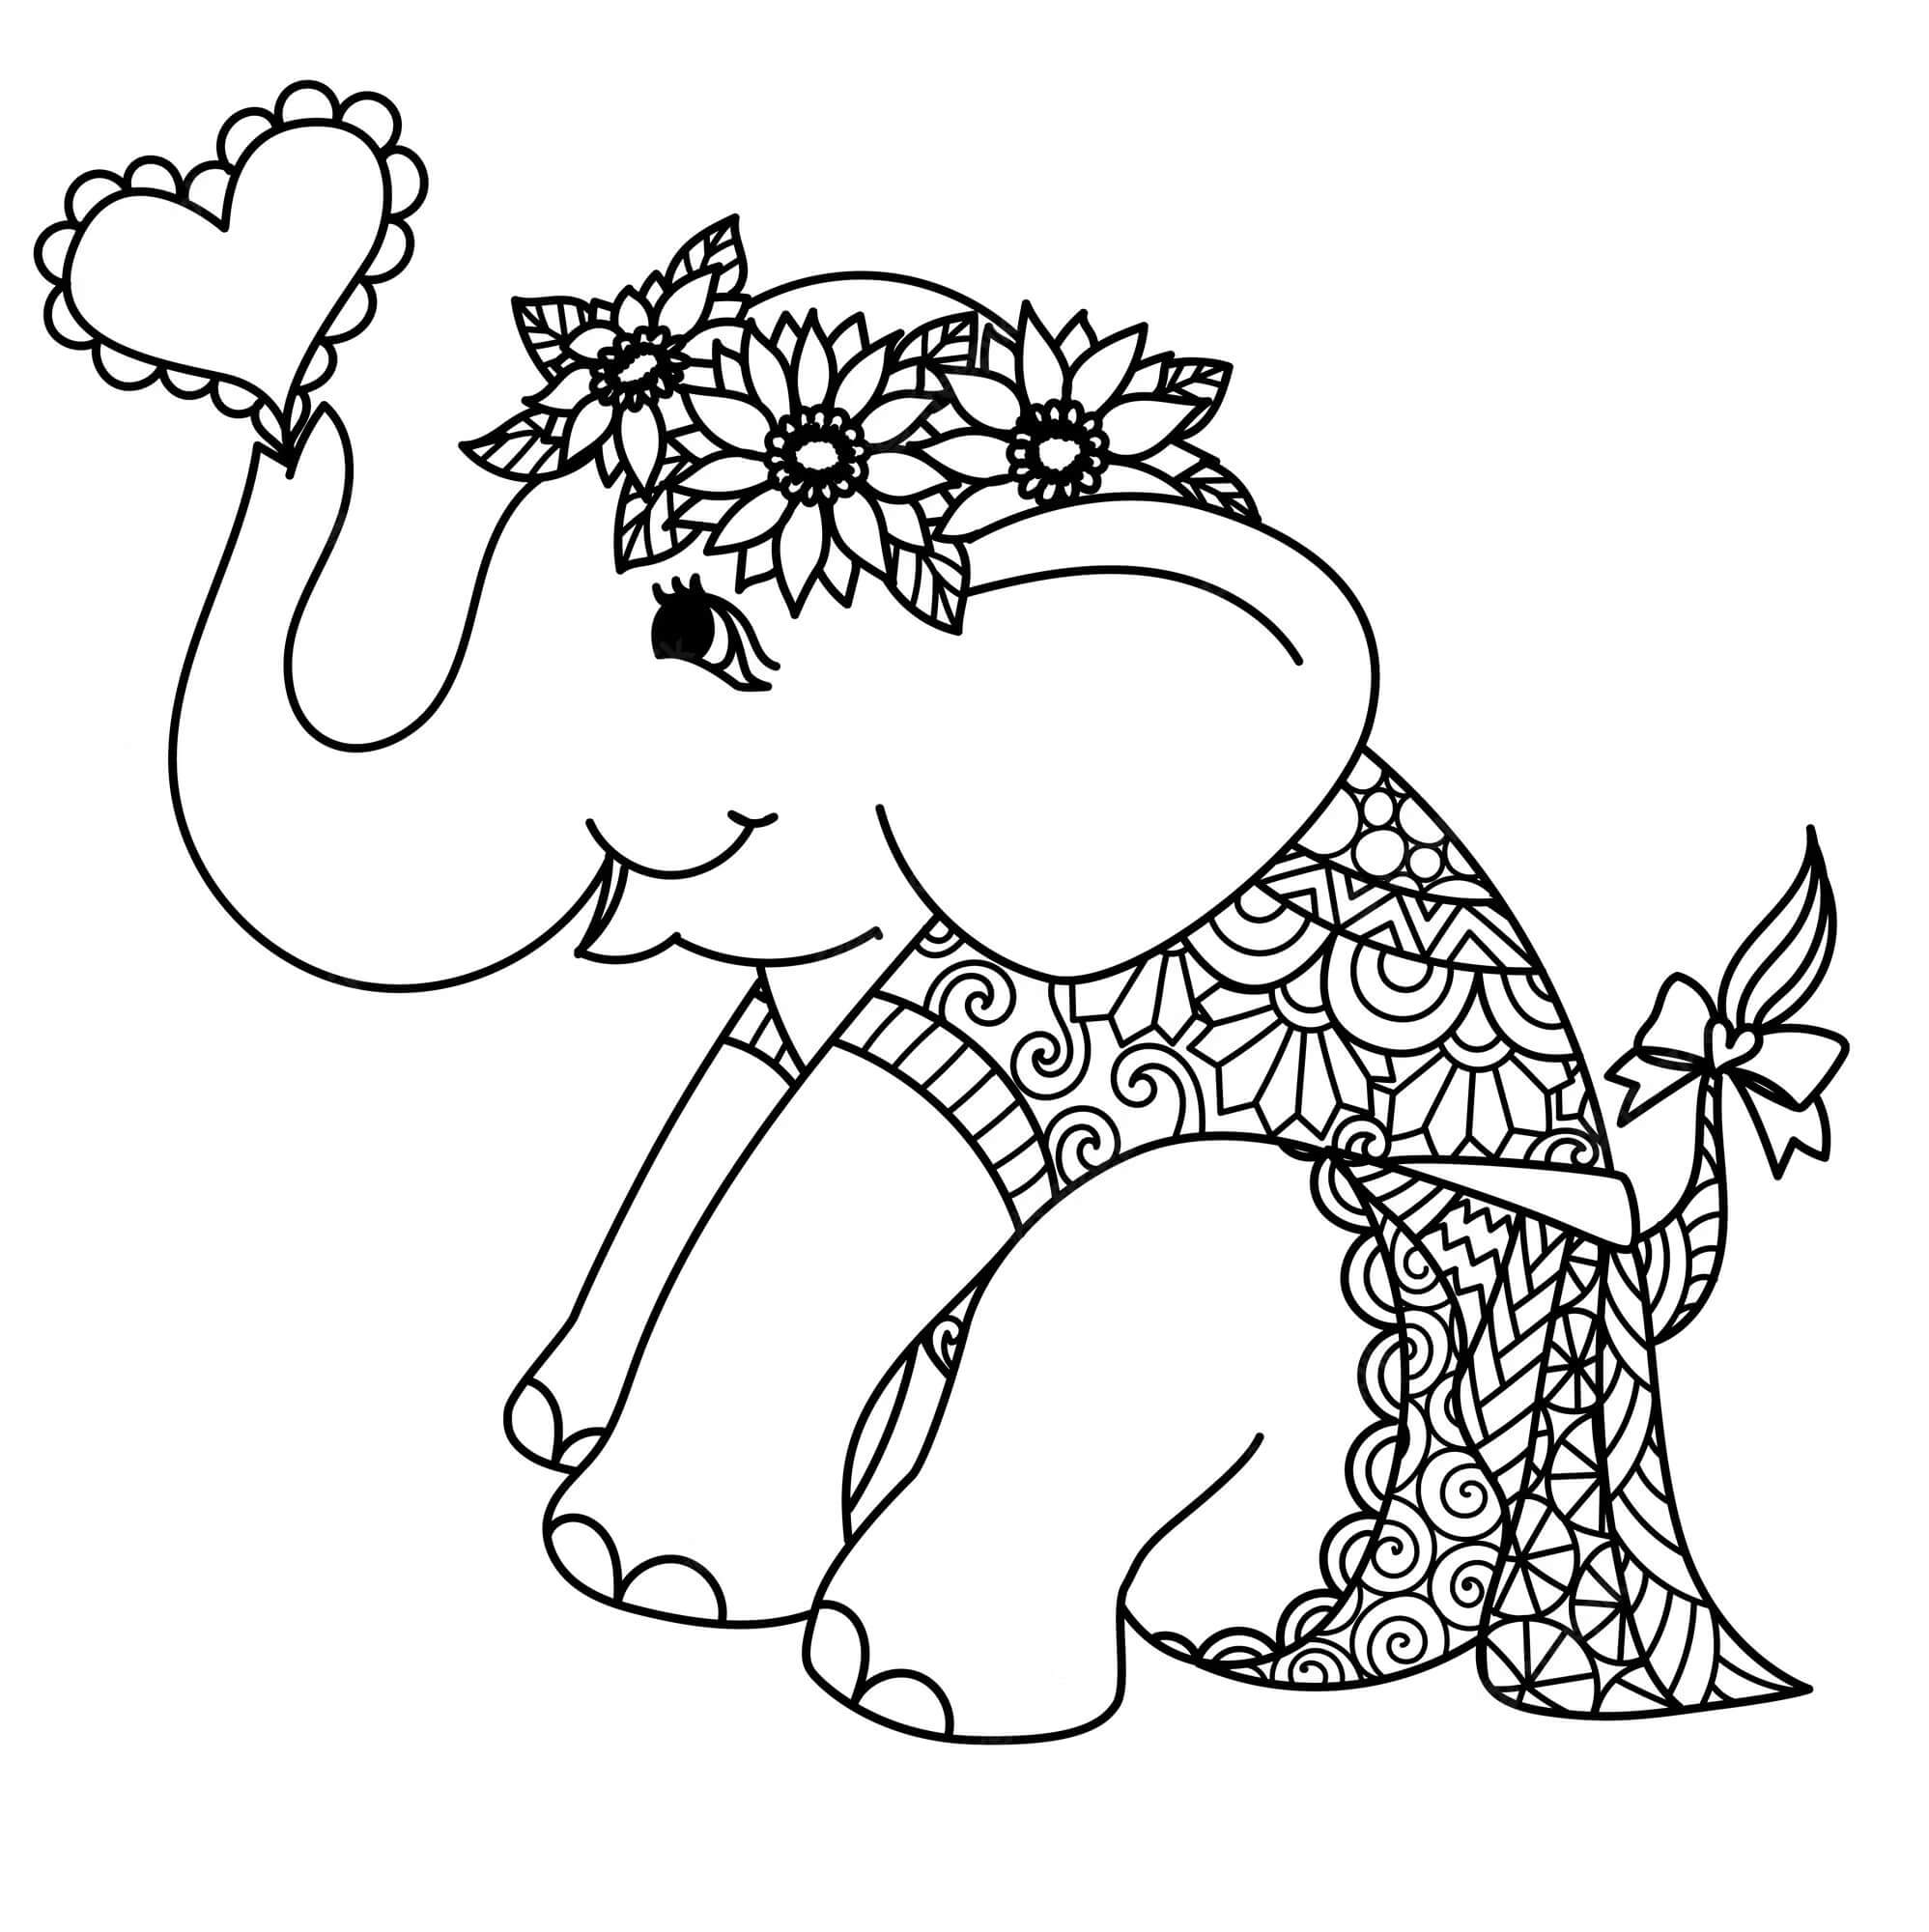 Mandala Elephant With Sunflowers Coloring Page Mandalas